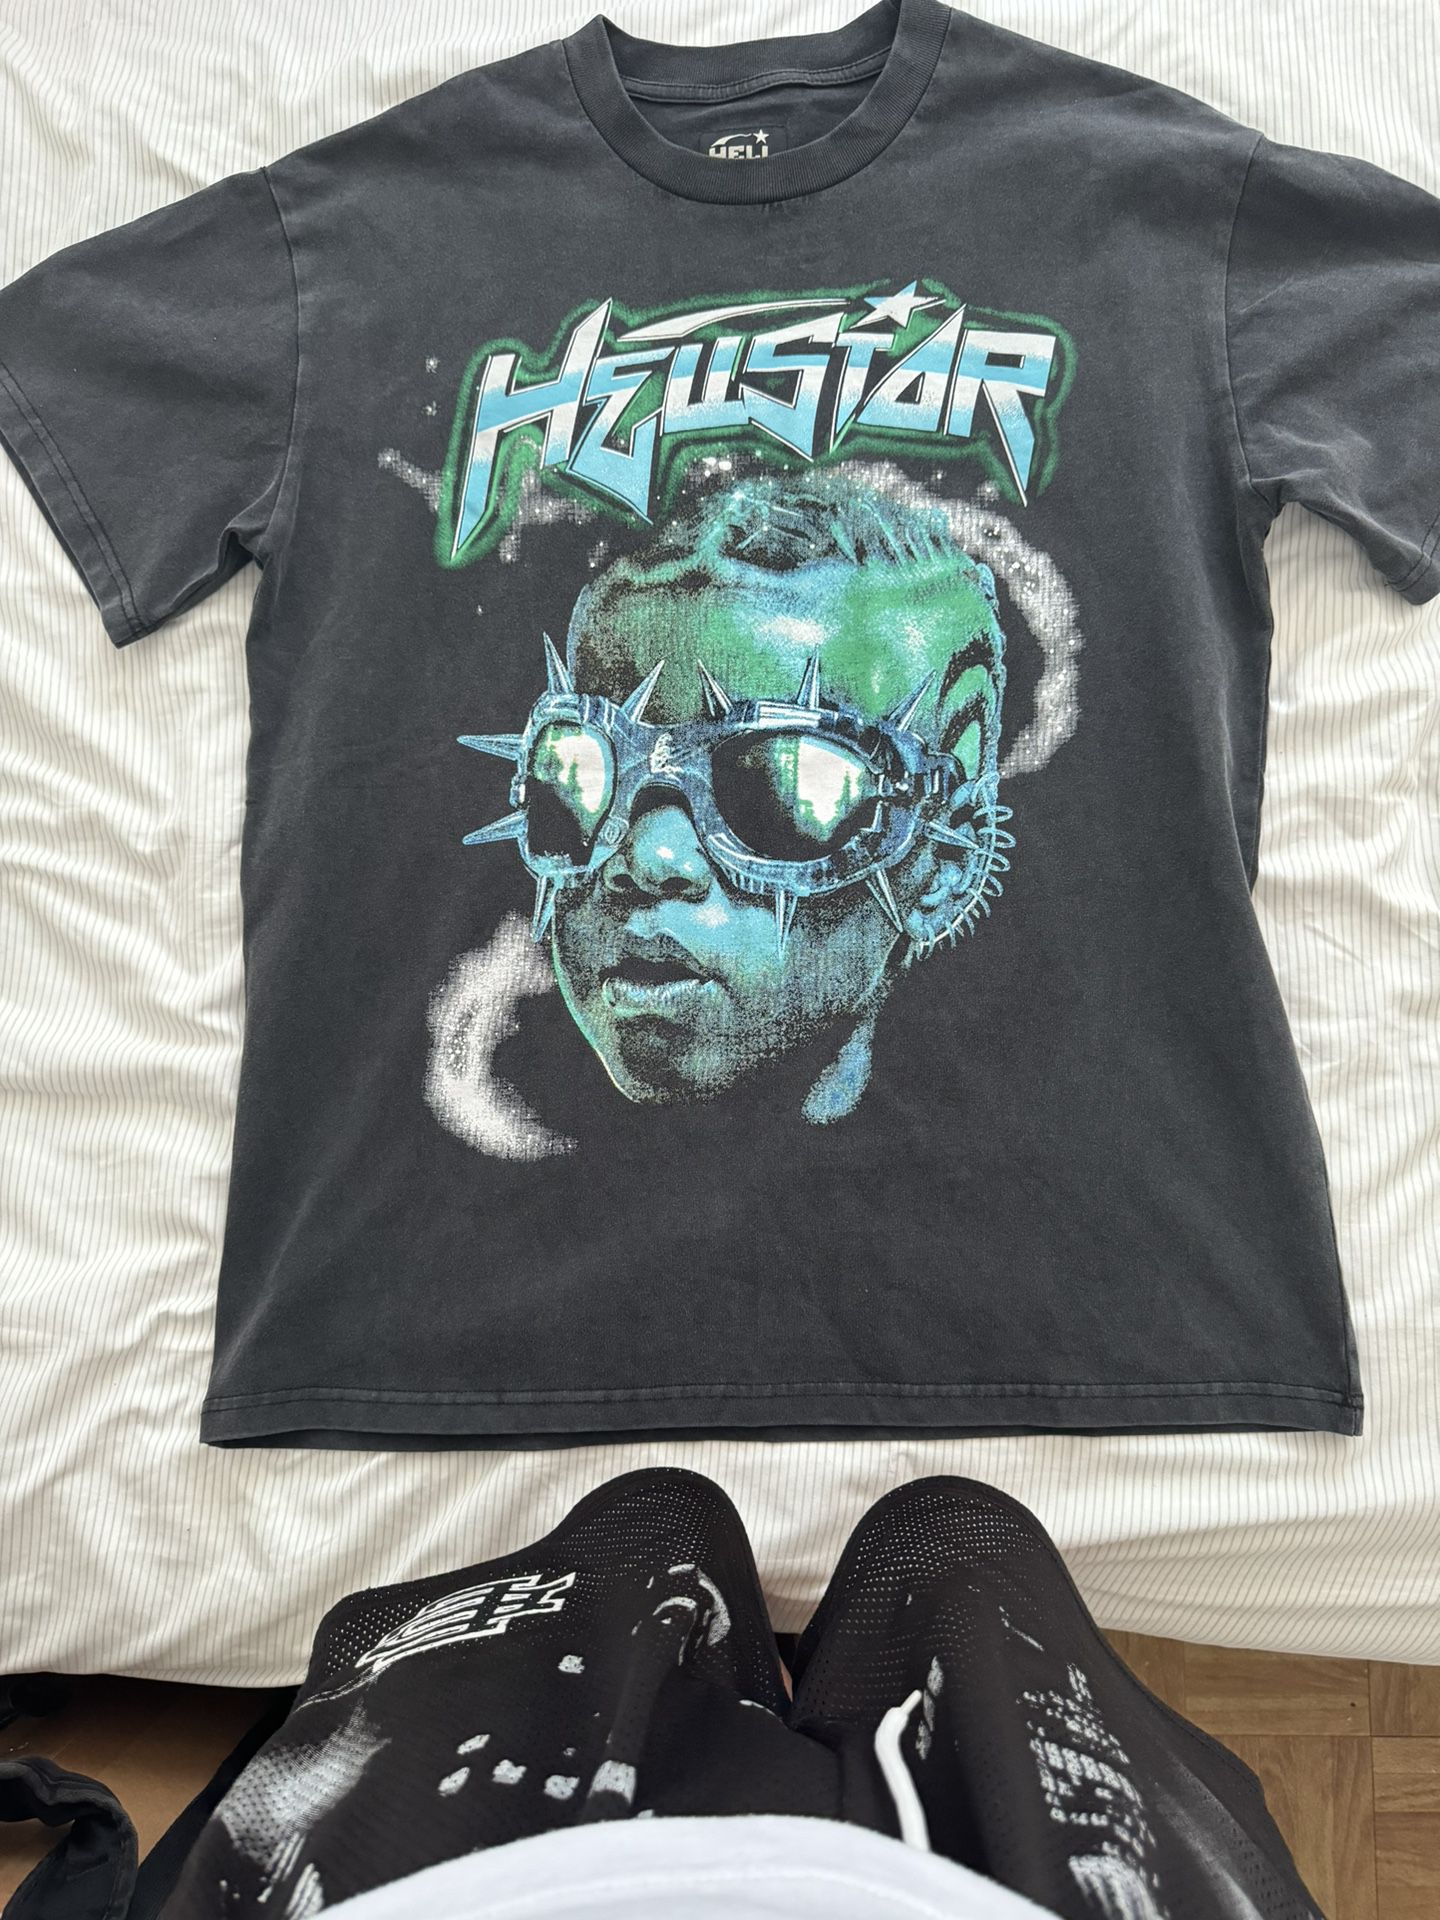 The Future HellStar T-Shirt